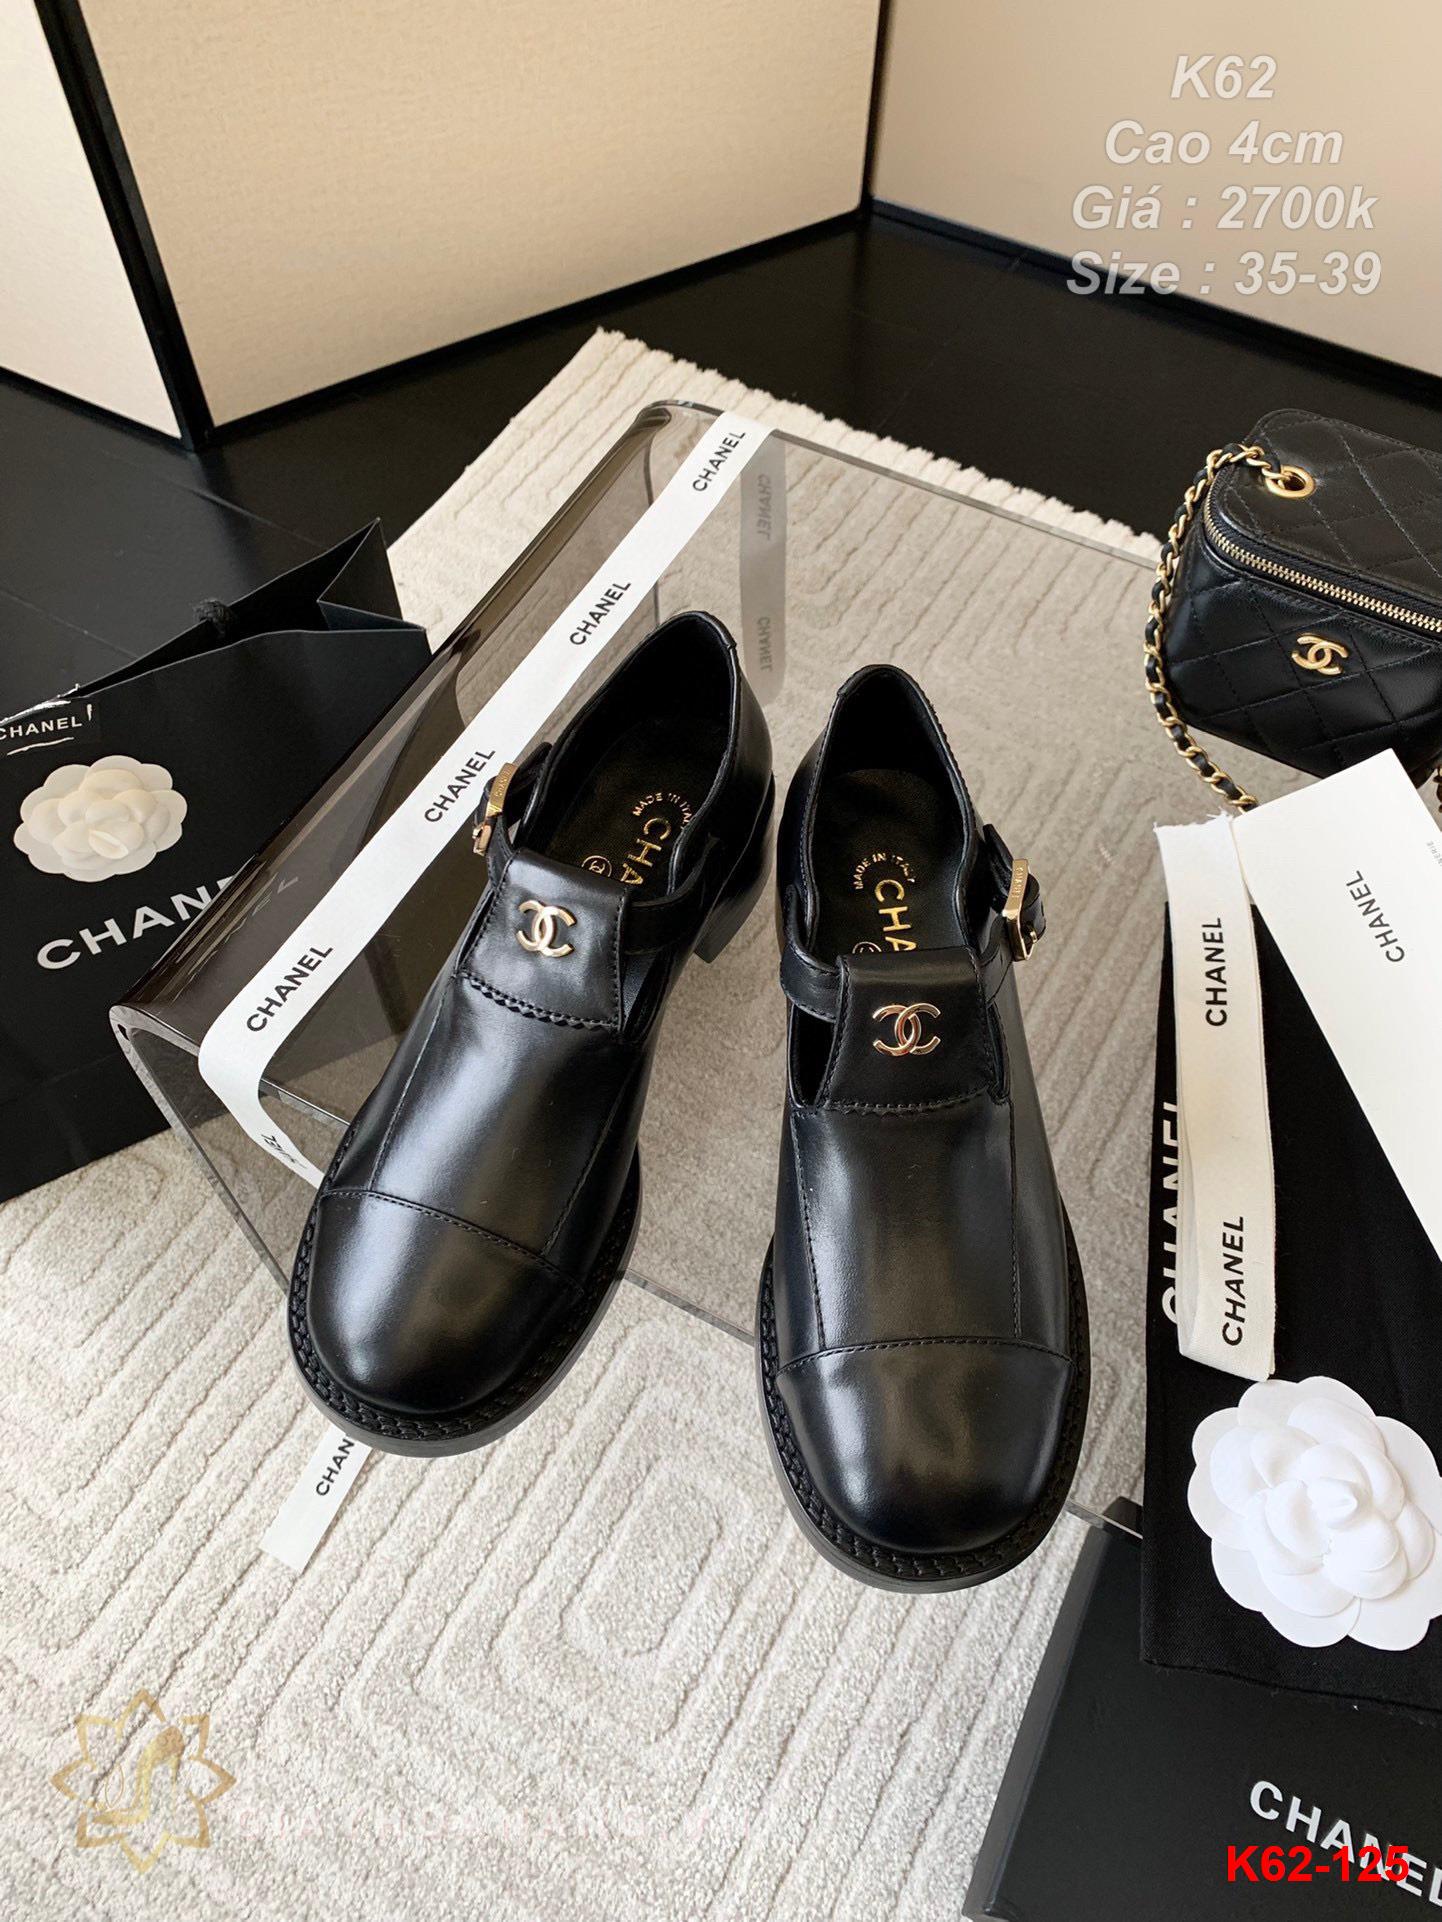 K62-125 Chanel giày cao gót 4cm siêu cấp